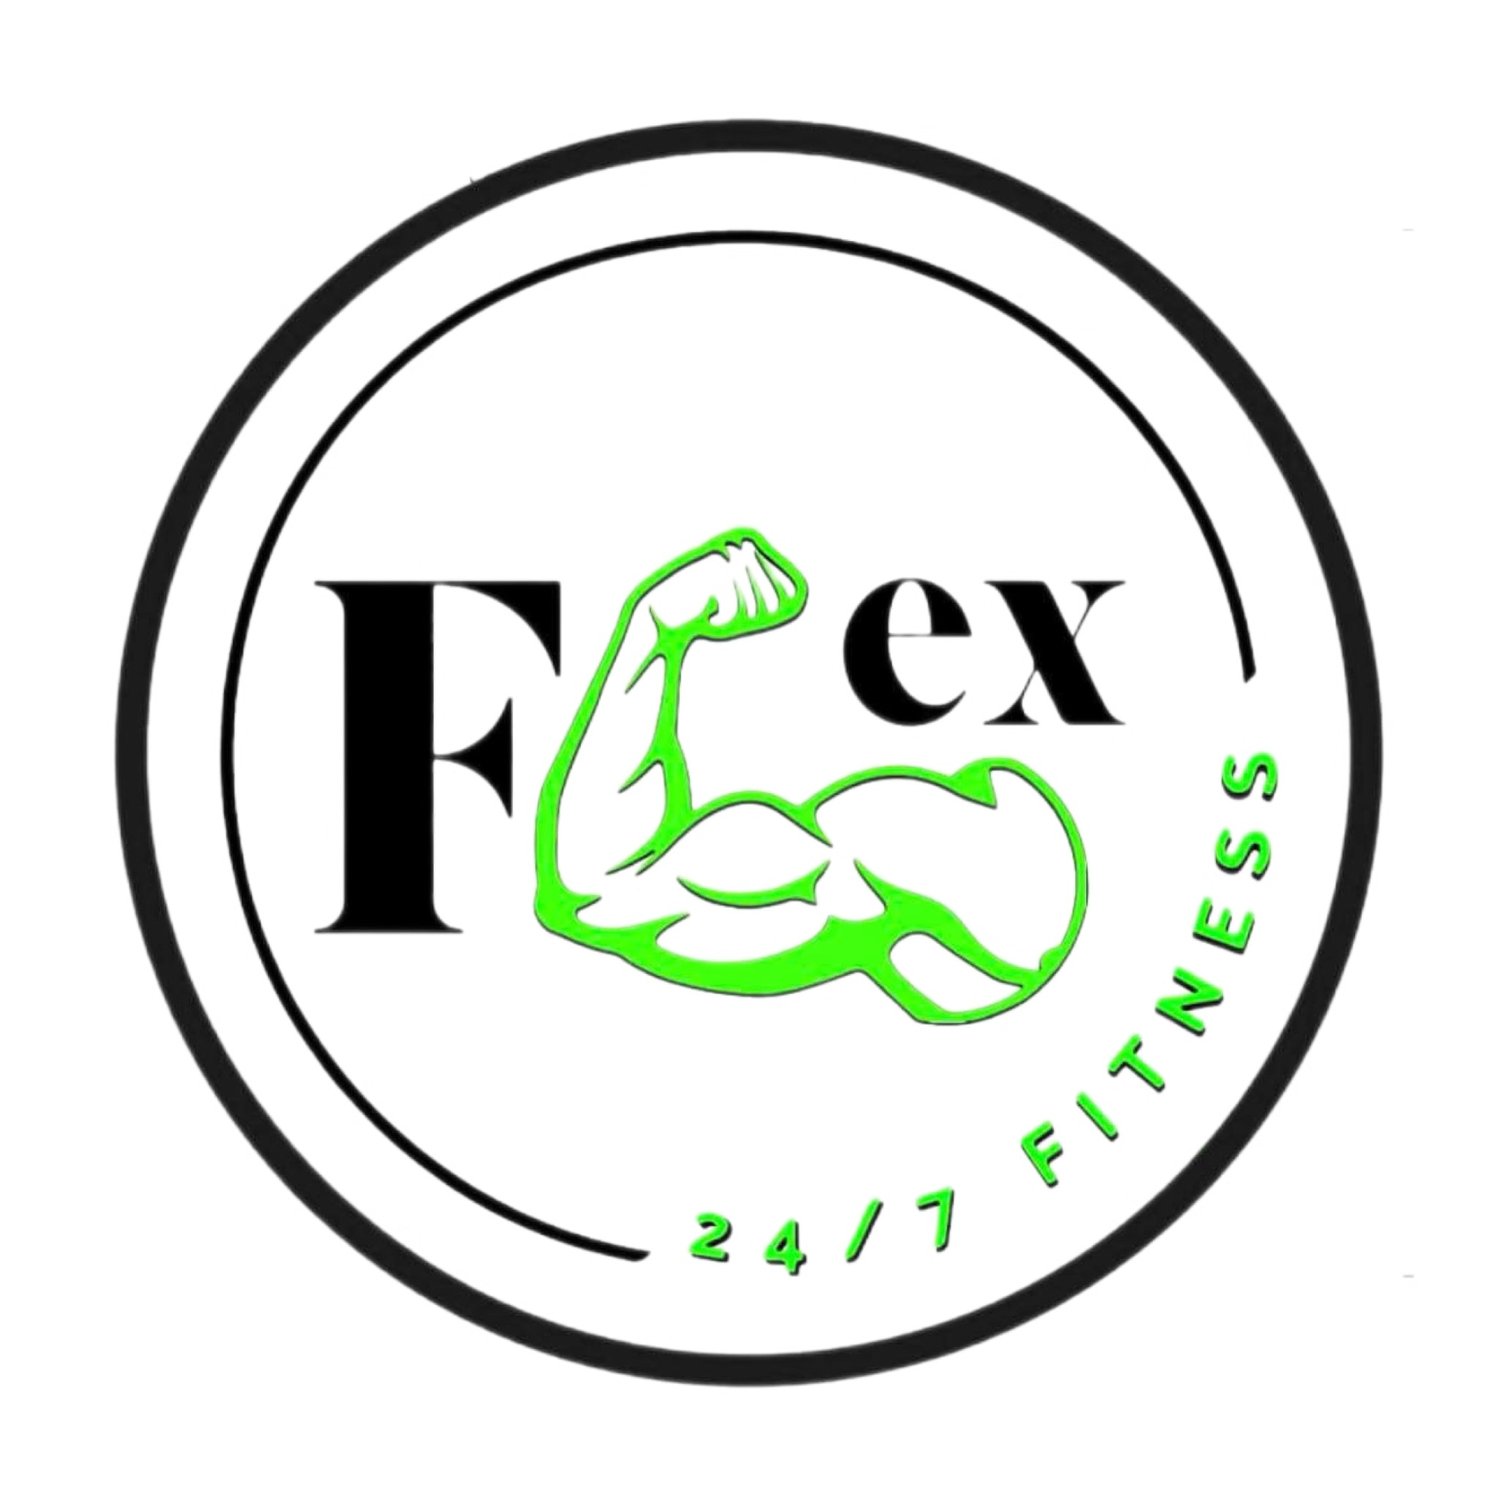 Flex Fitness 24/7